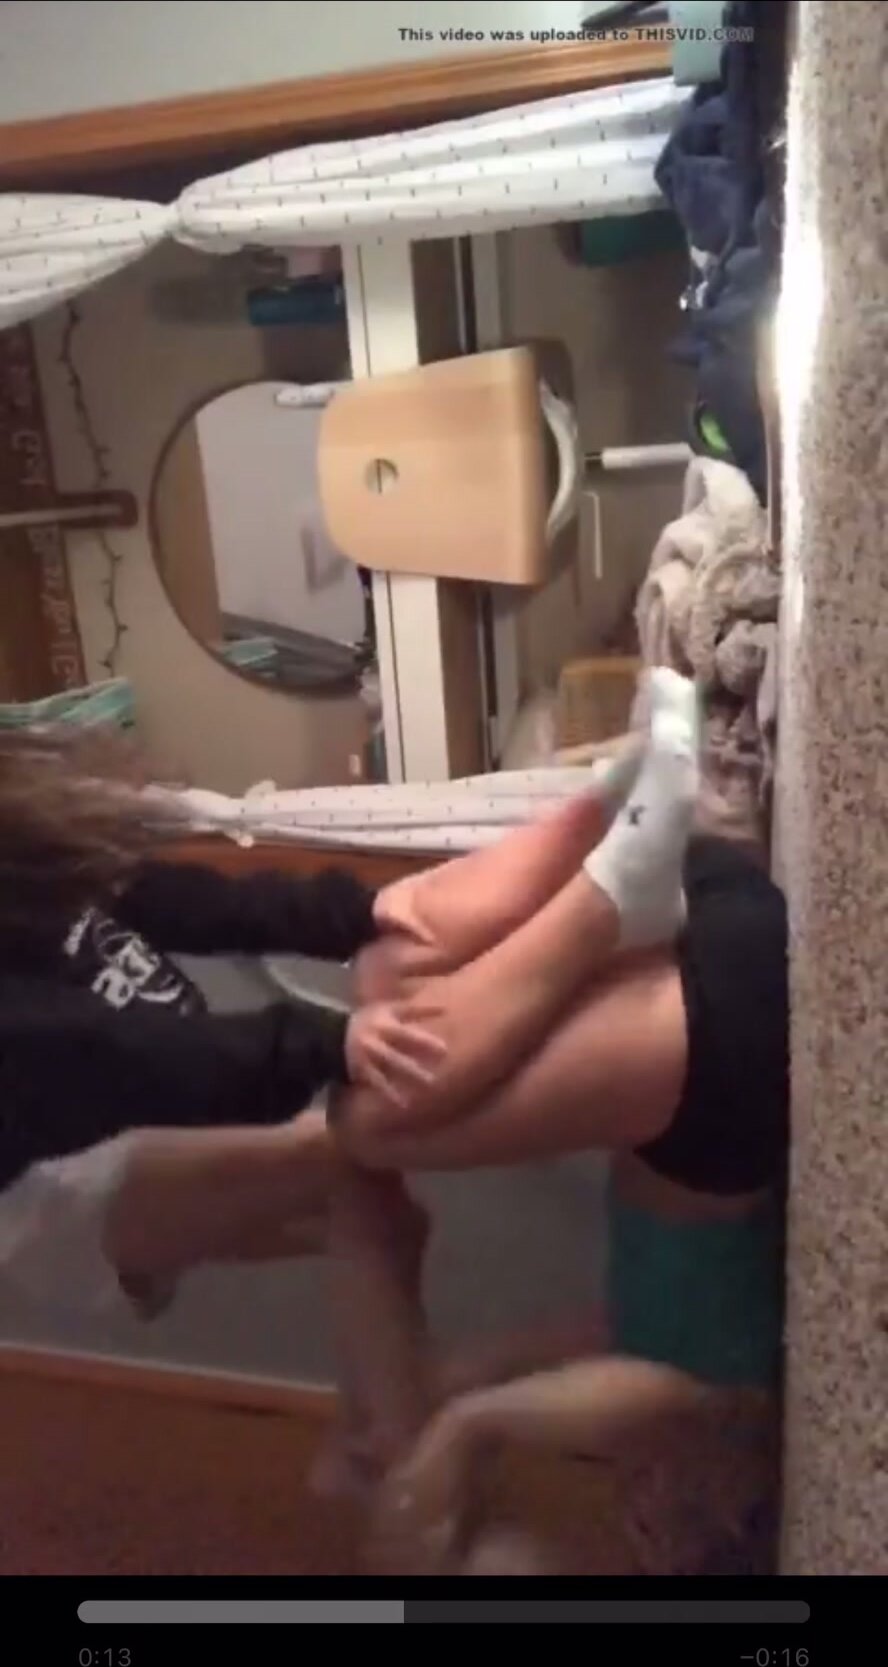 She peed herself while making a TikTok